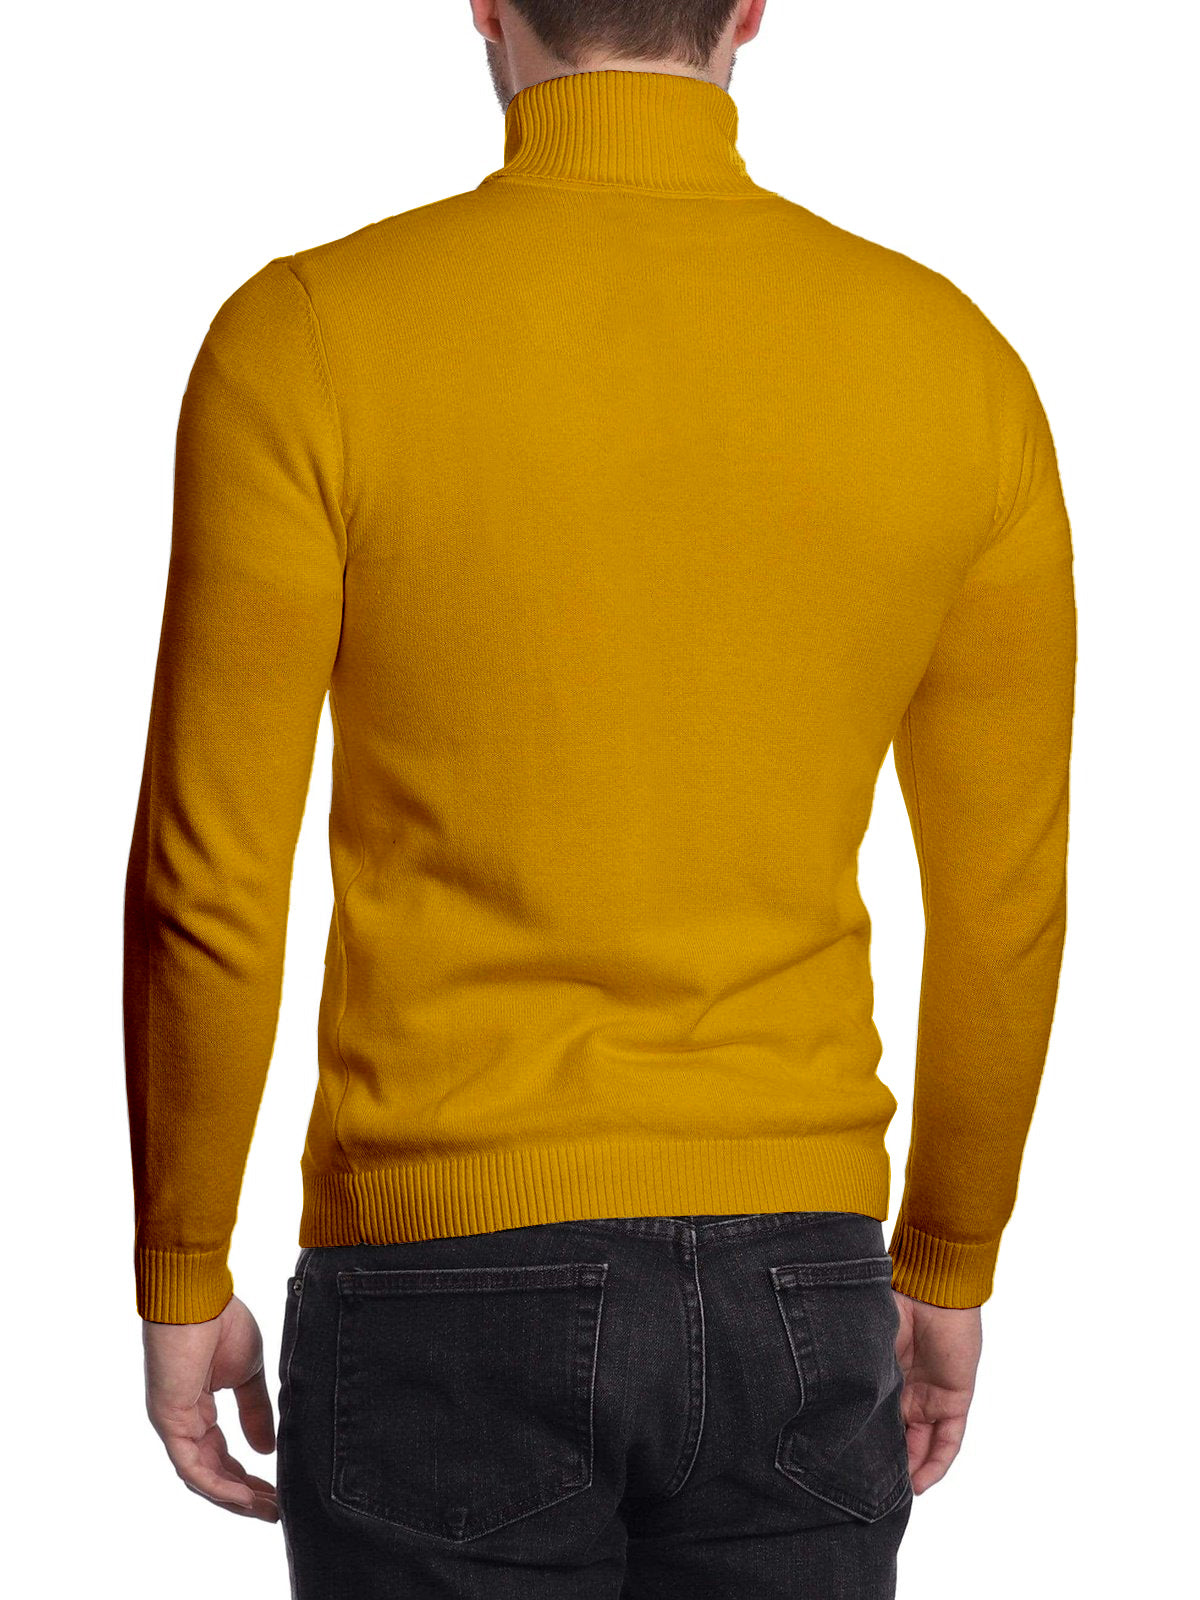 Arthur Black Men's Solid Mustard Pullover Cotton Blend Turtleneck Sweater Shirt